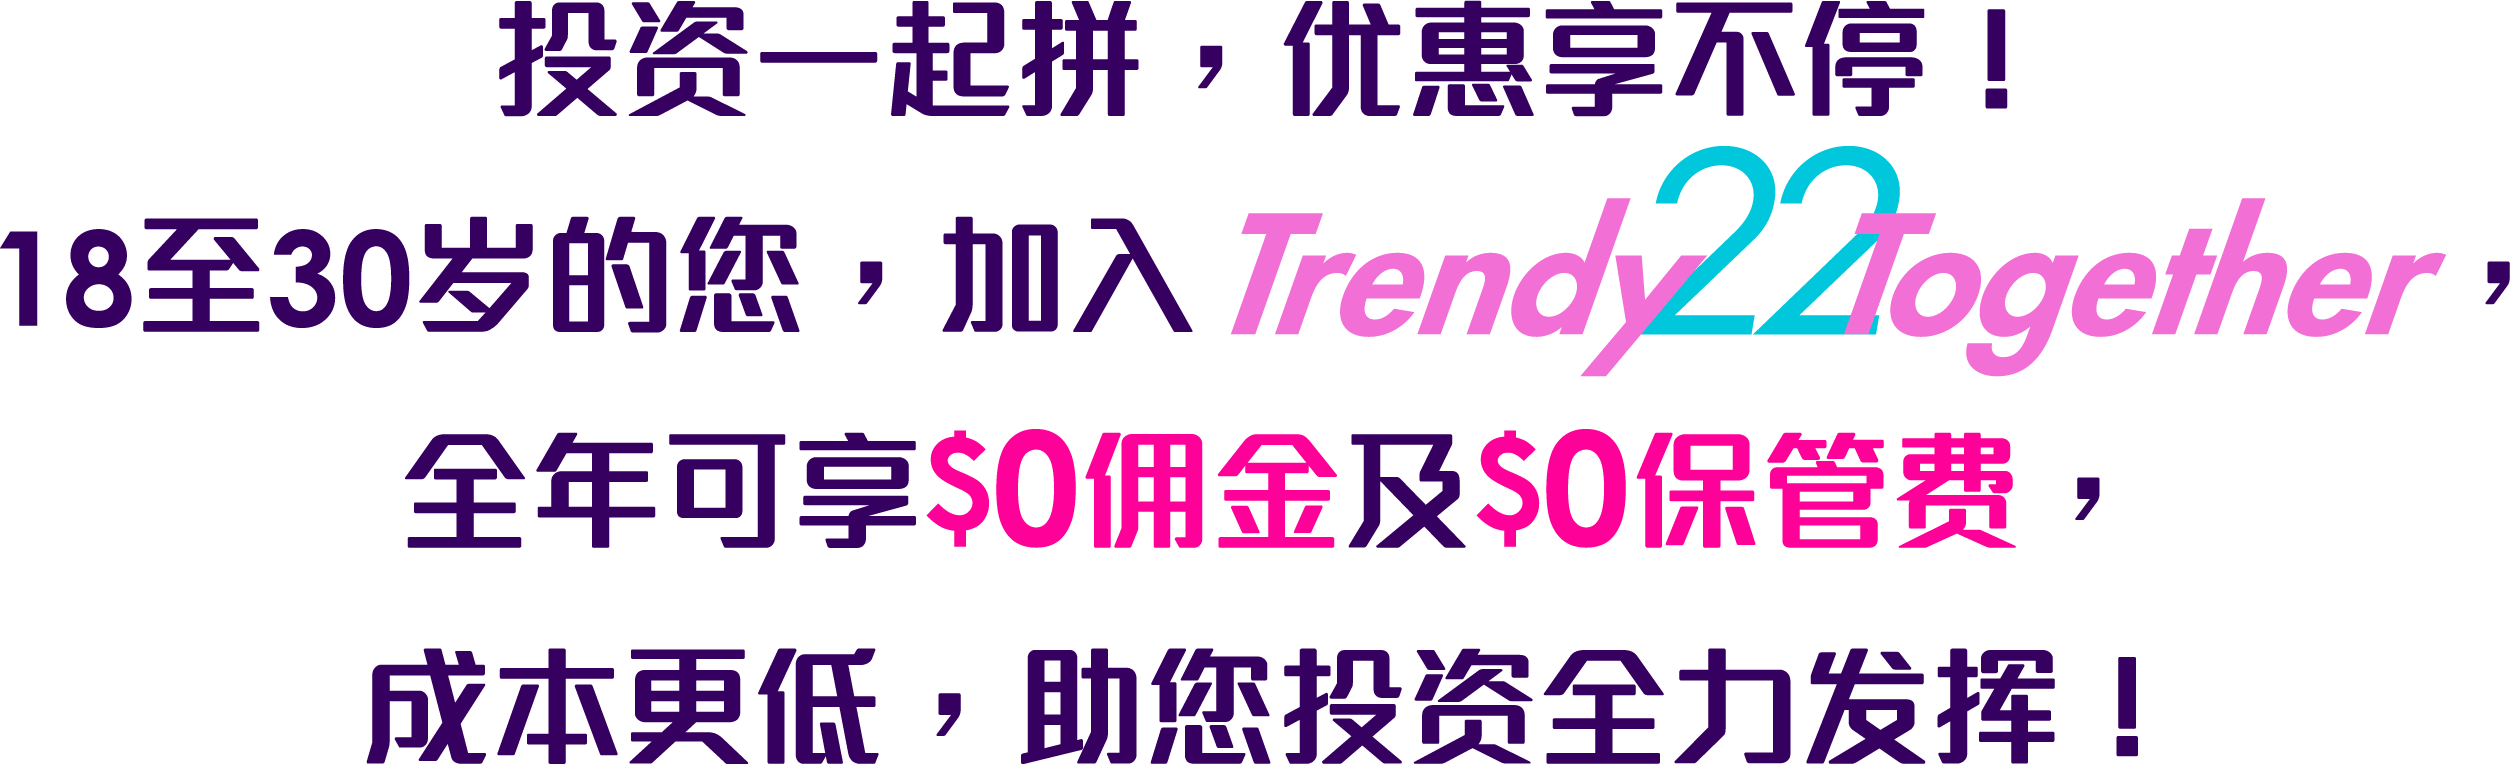 Trading拍住上，着数一齐享！18⾄30岁的您，加入TrendyTogether，全年可享HK$0佣金及HK$0保管费，成本更低，助您投资全力发挥！